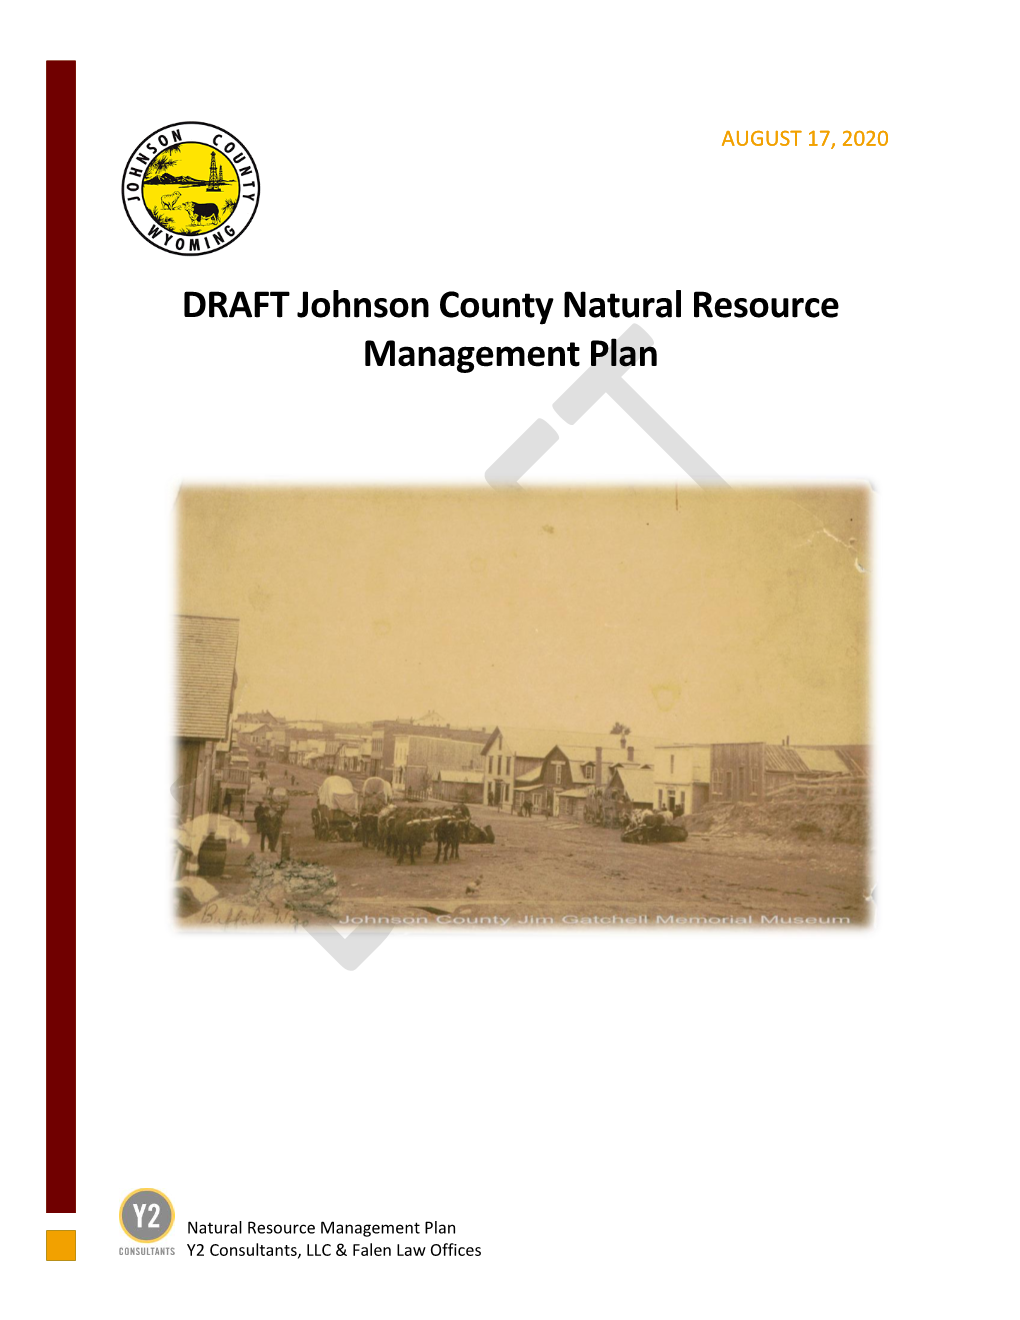 DRAFT Johnson County Natural Resource Management Plan